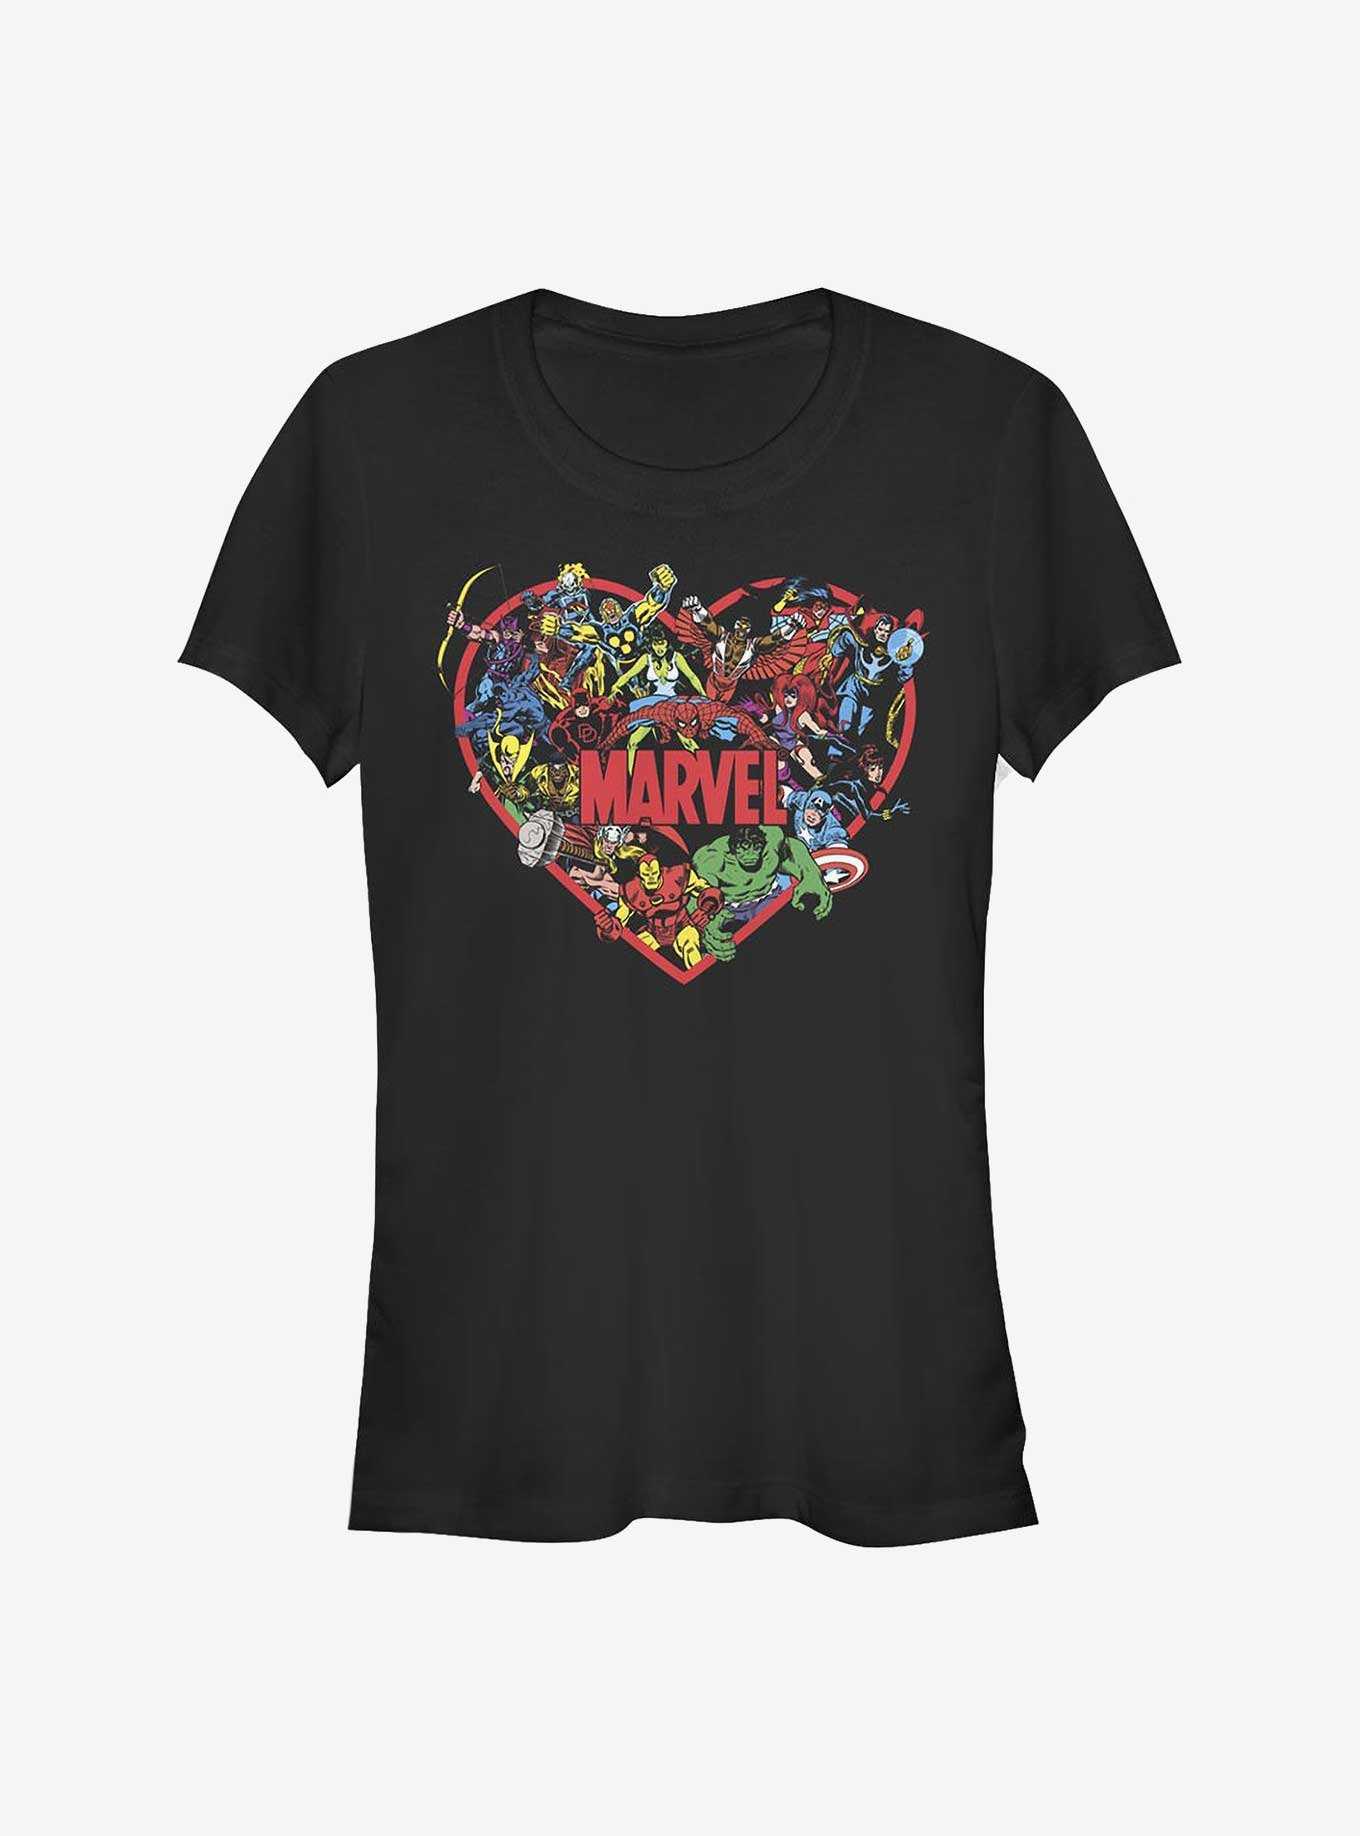 OFFICIAL Marvel Comics Marvel Tees & Topic Hot | T-Shirts